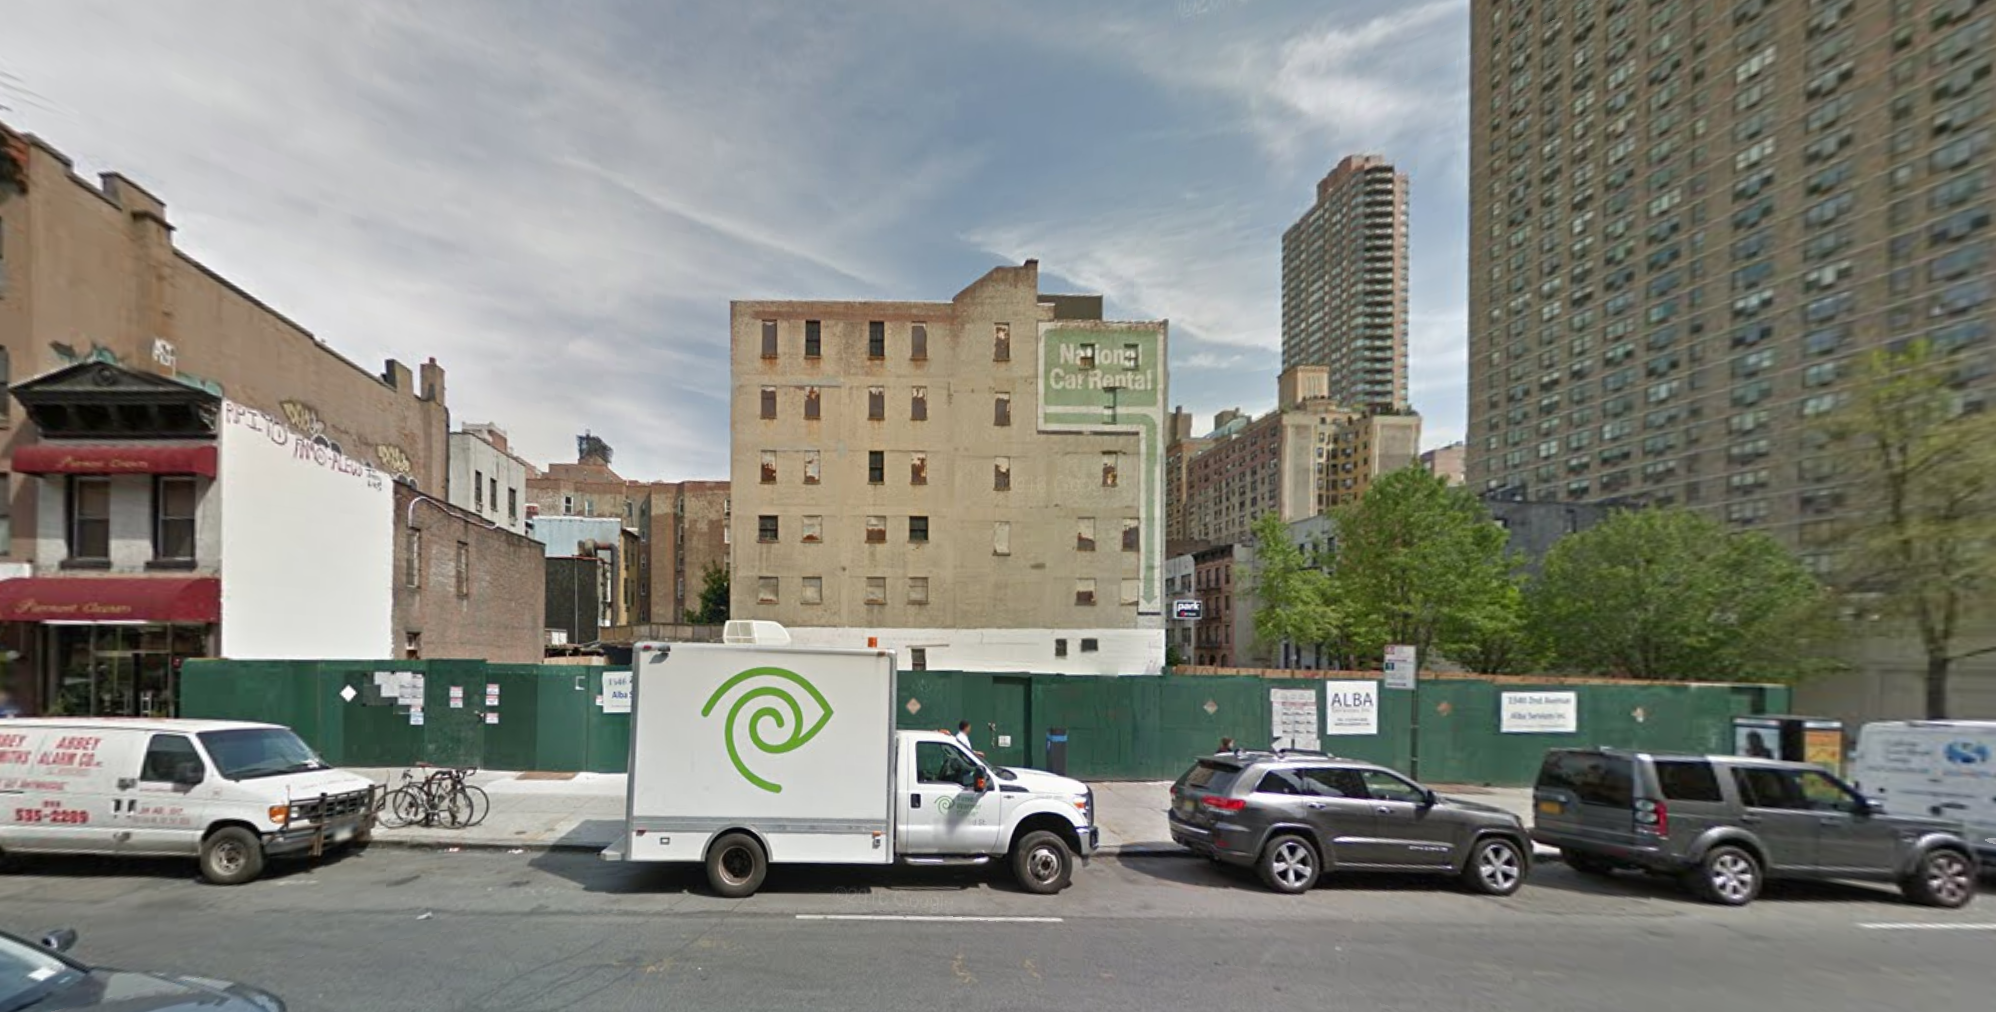 301 East 80th Street, image via Google Maps